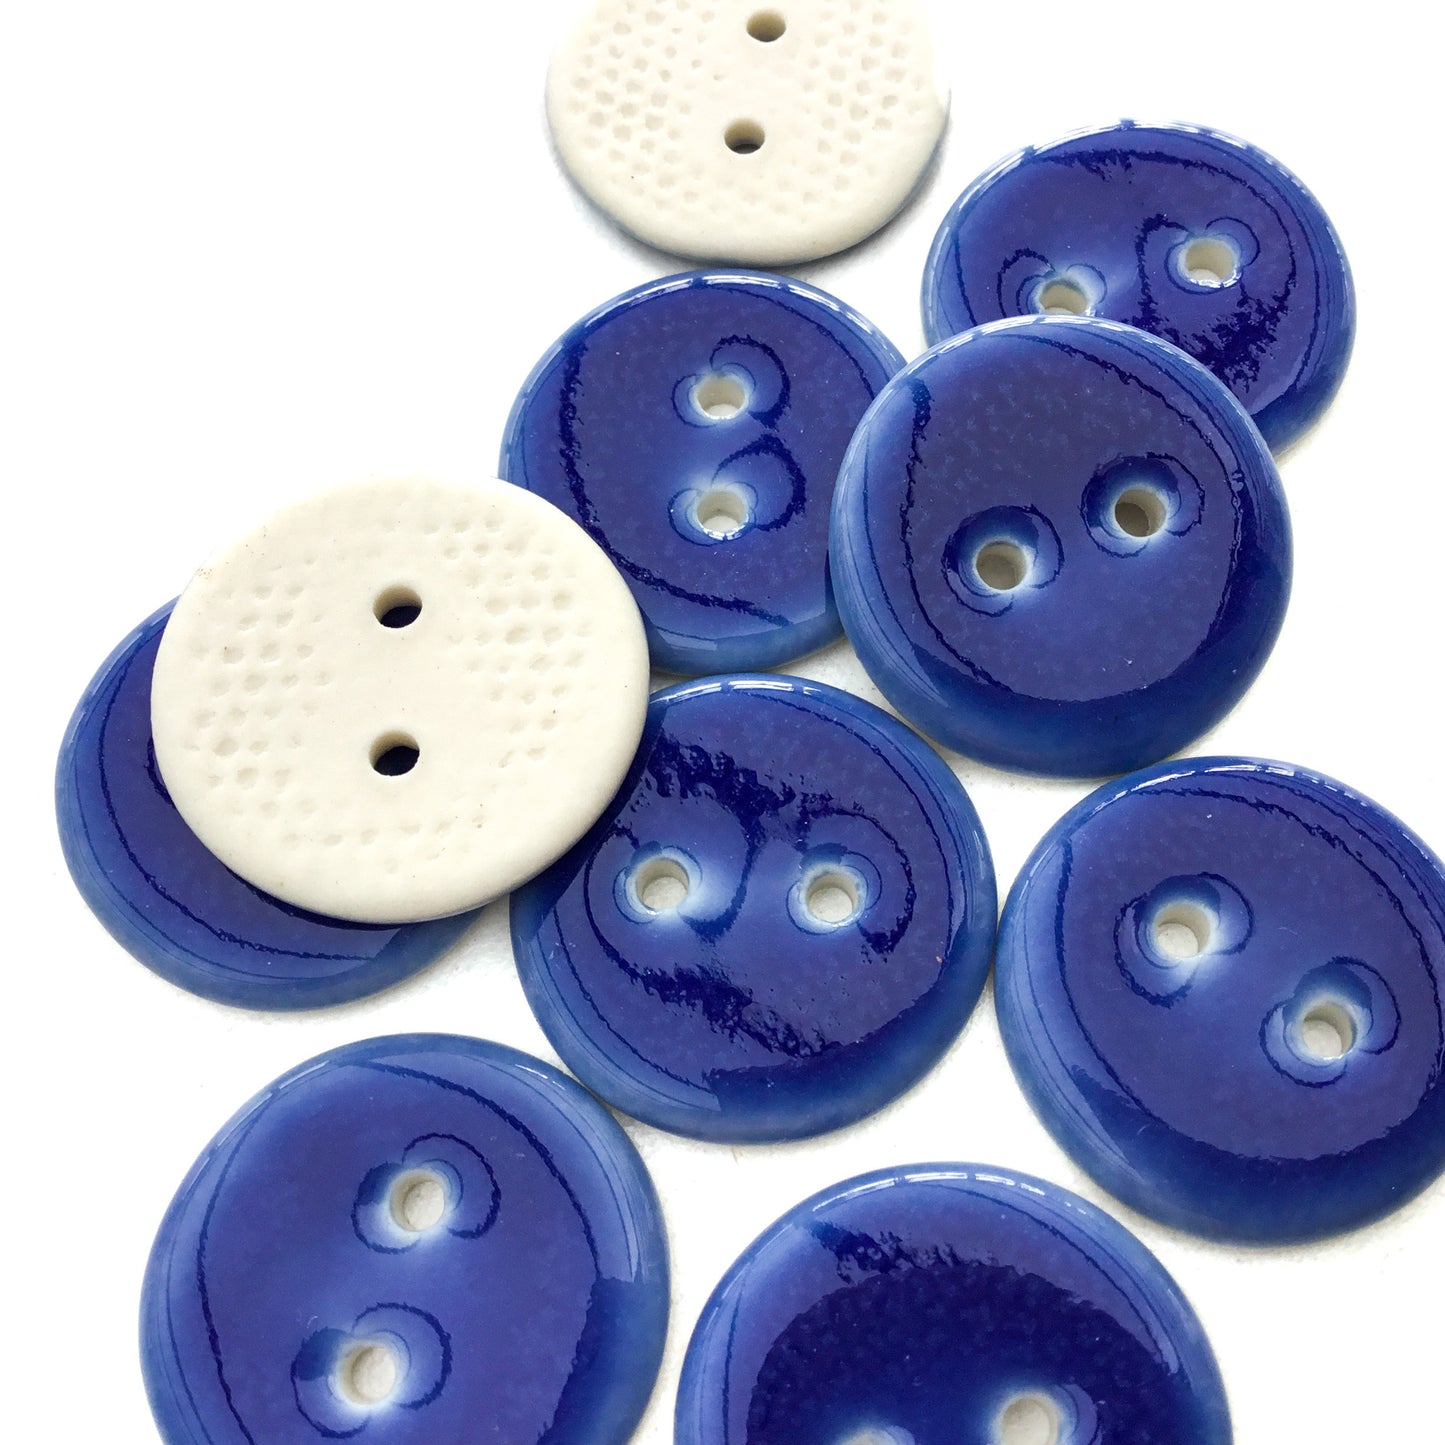 Primary Blue Porcelain Button  7/8"